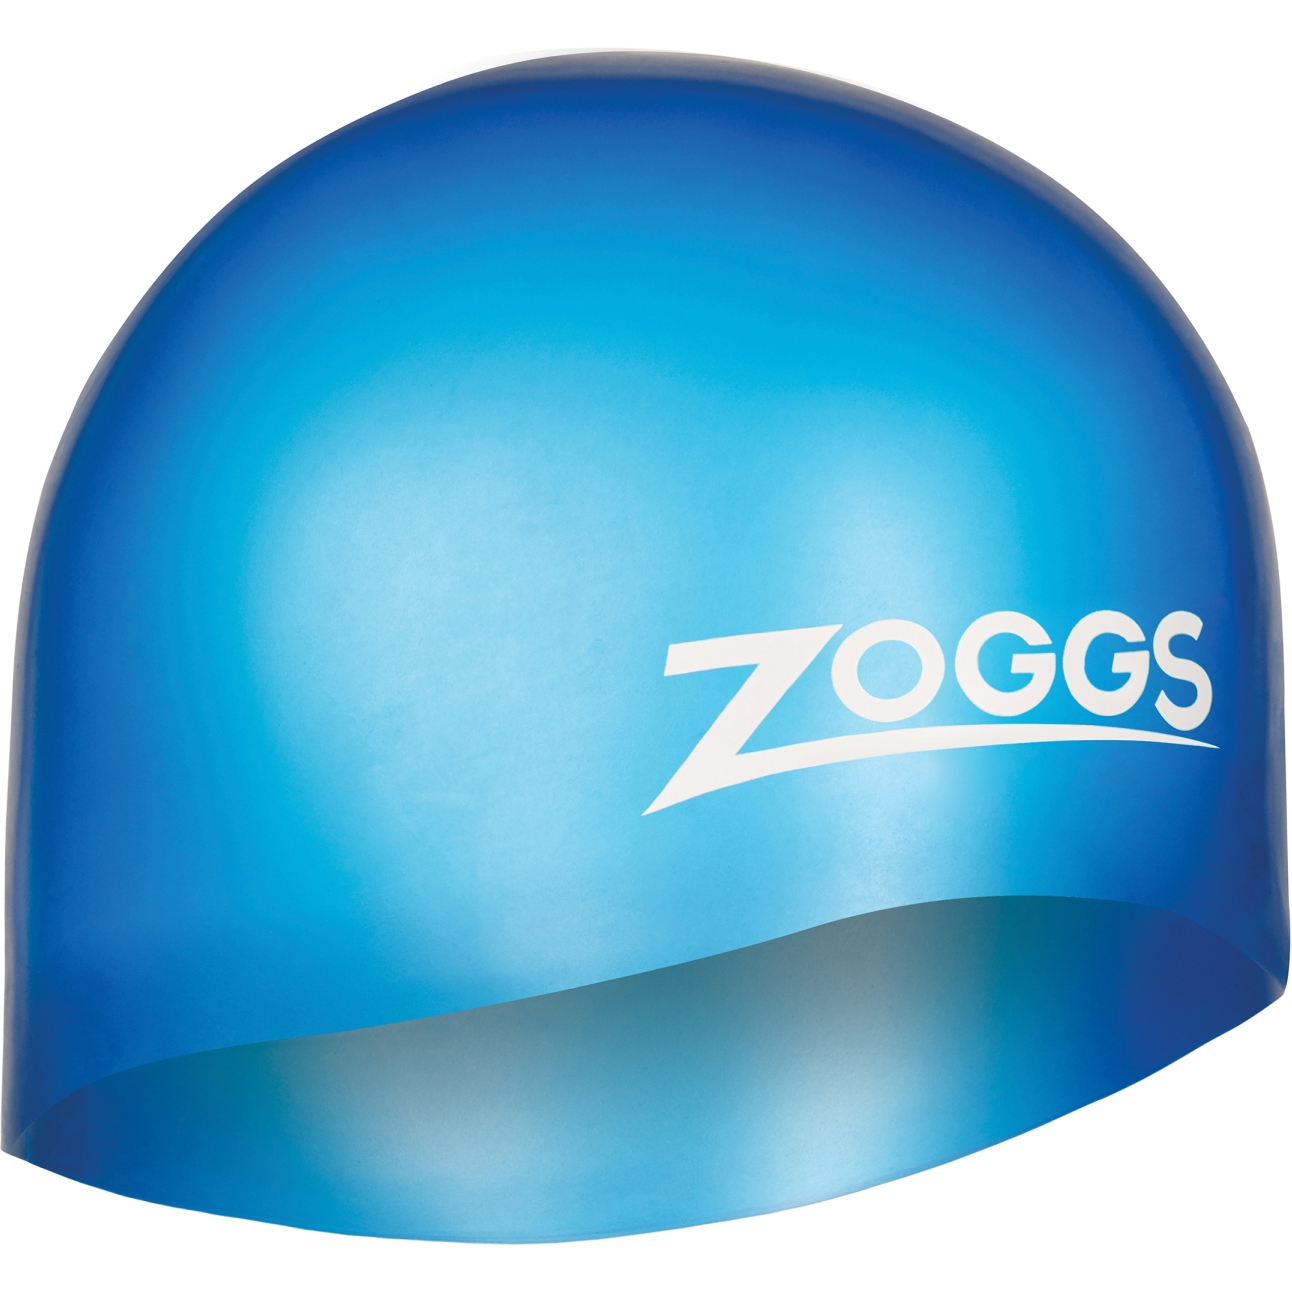 Productfoto van Zoggs Badmuts - Easy Fit Silicone - blauw